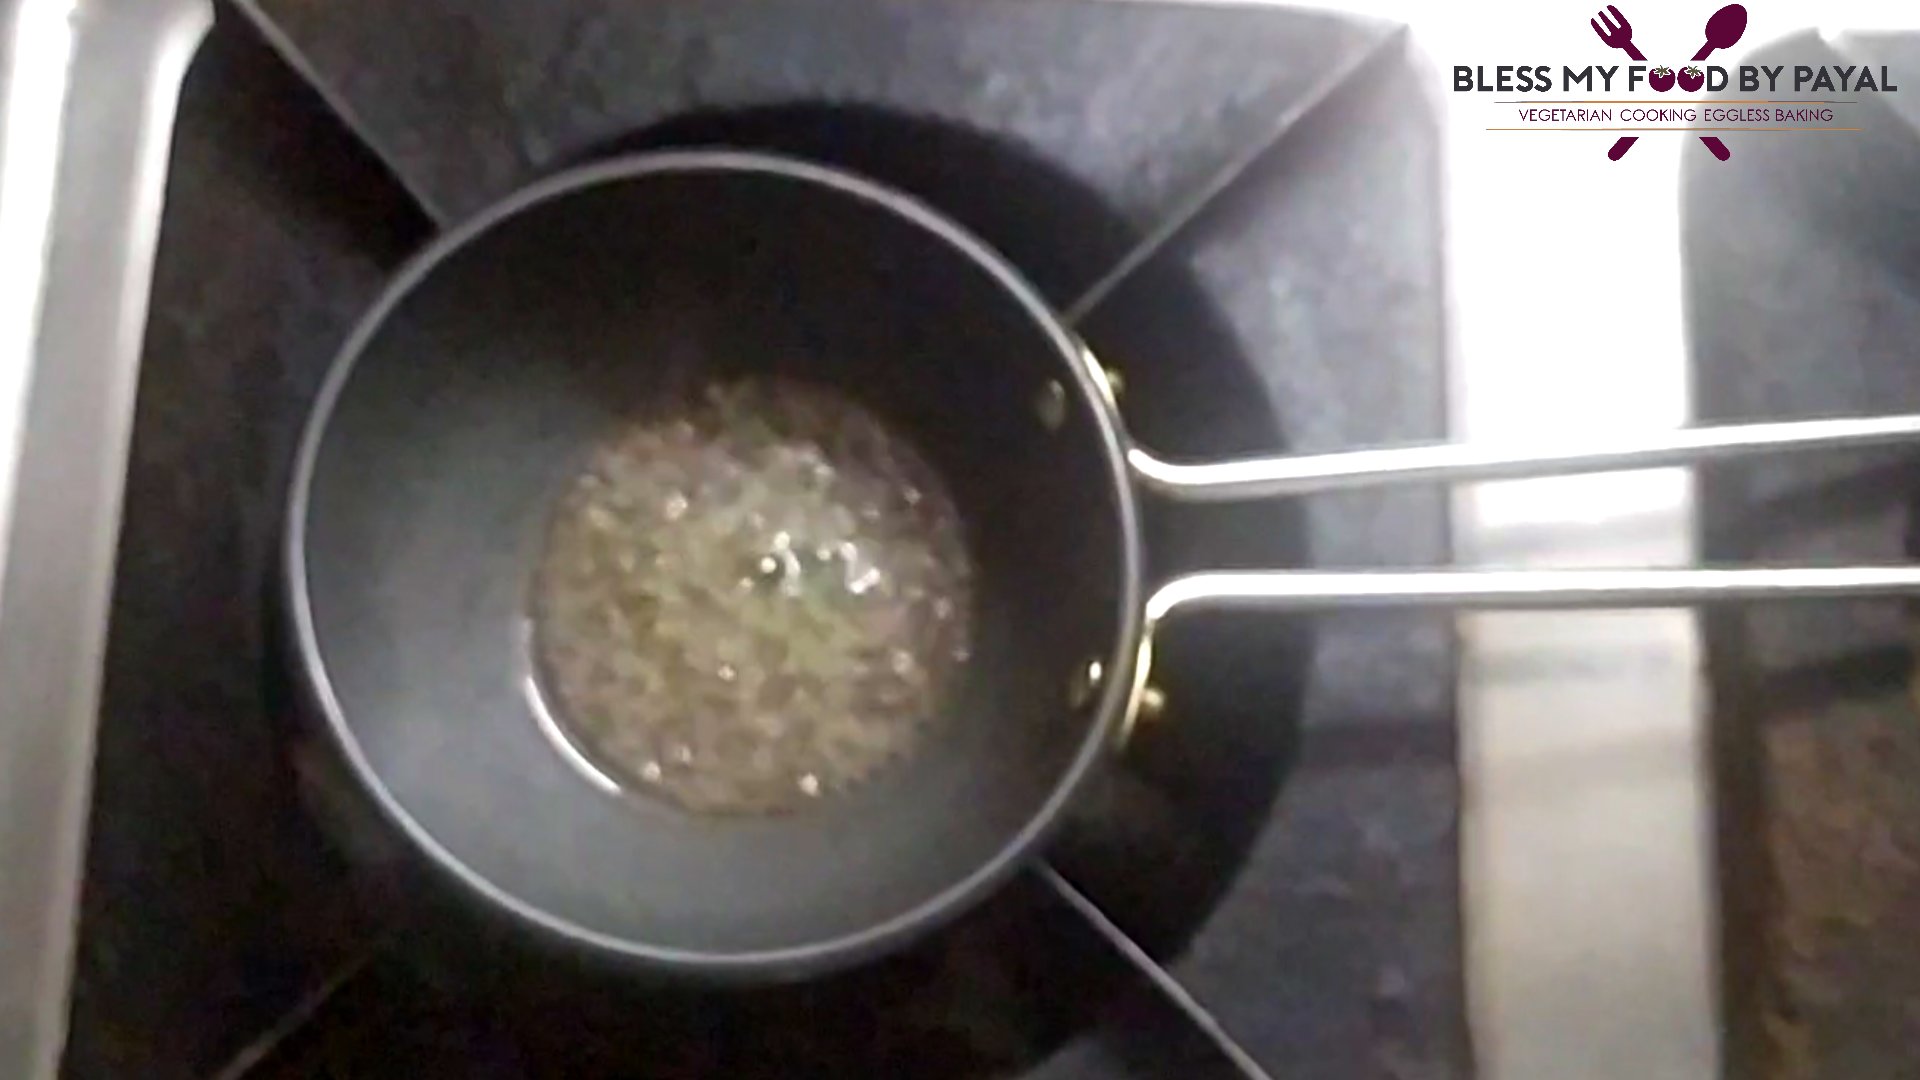 Besan dhokla without eno | khaman dhokla without eno | how to make dhokla without eno salt